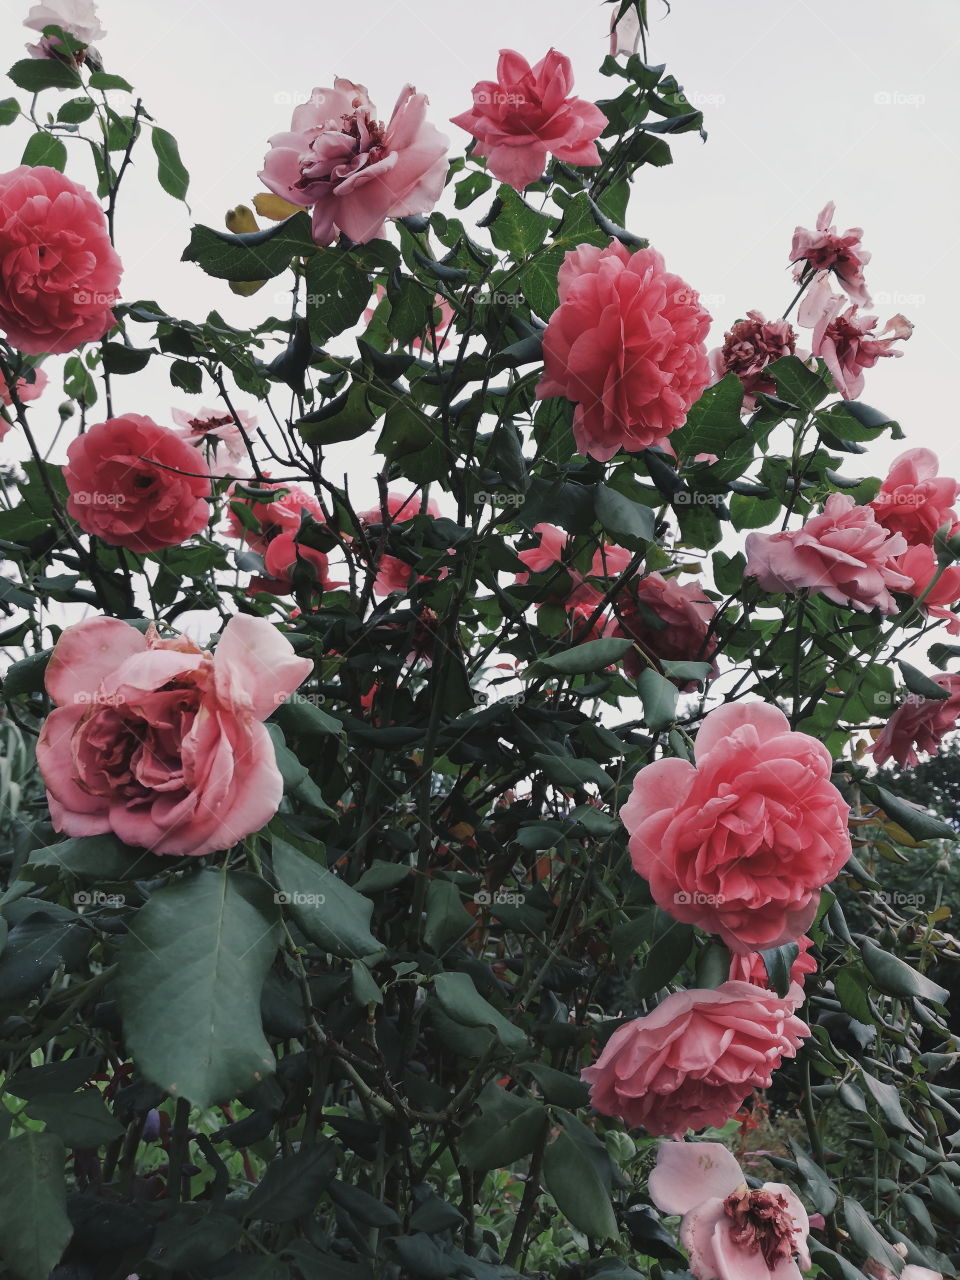 Rose bush in my neighbours garden.